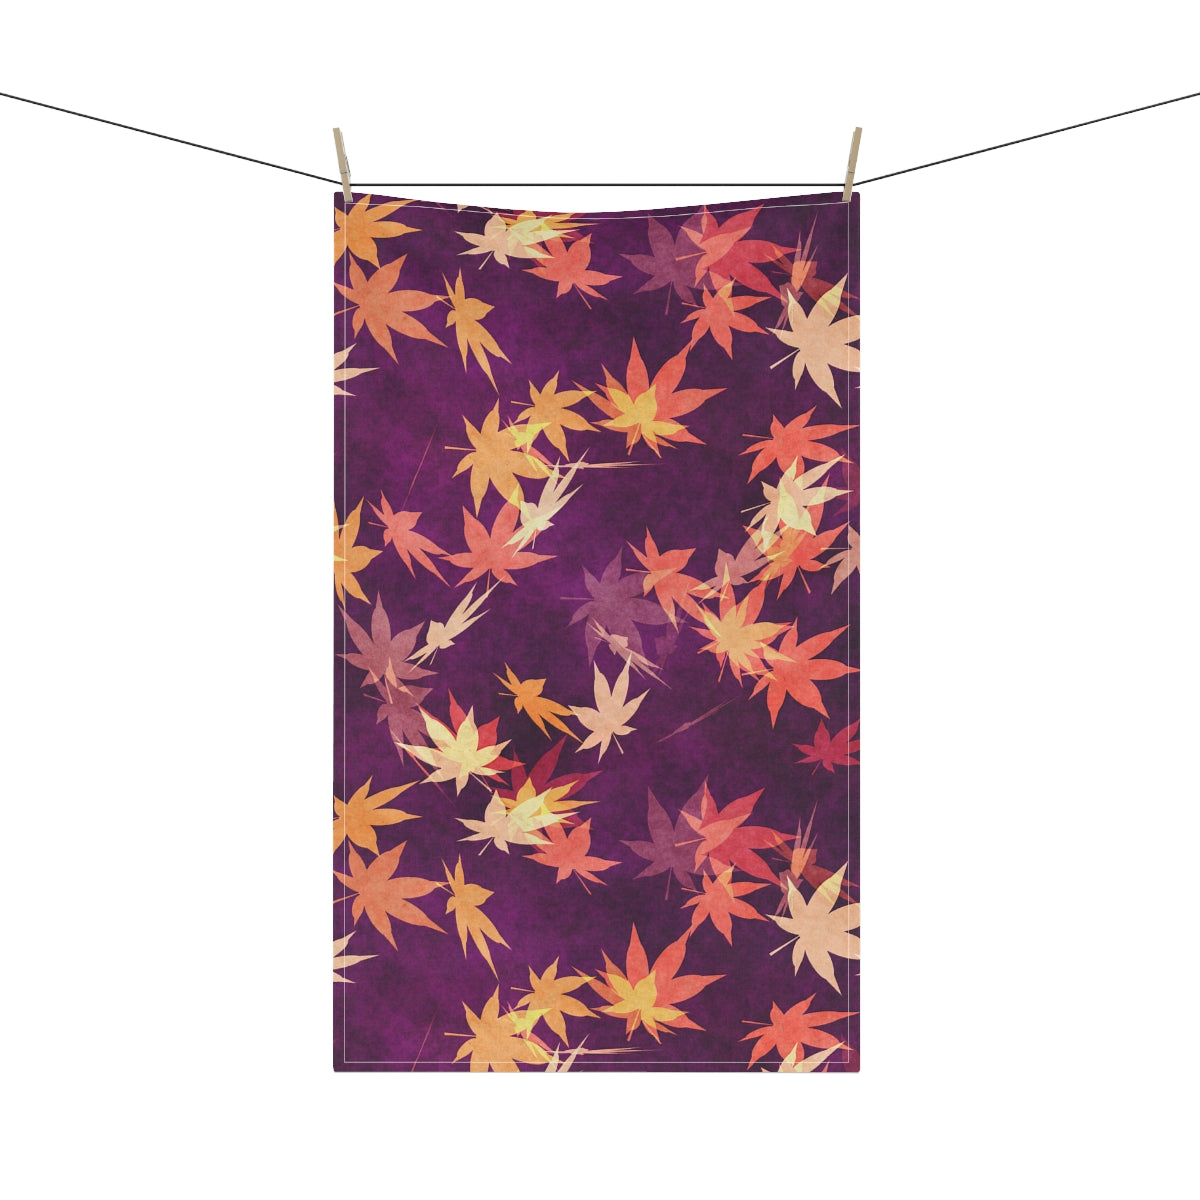 Autumn Leaves Kitchen Towel